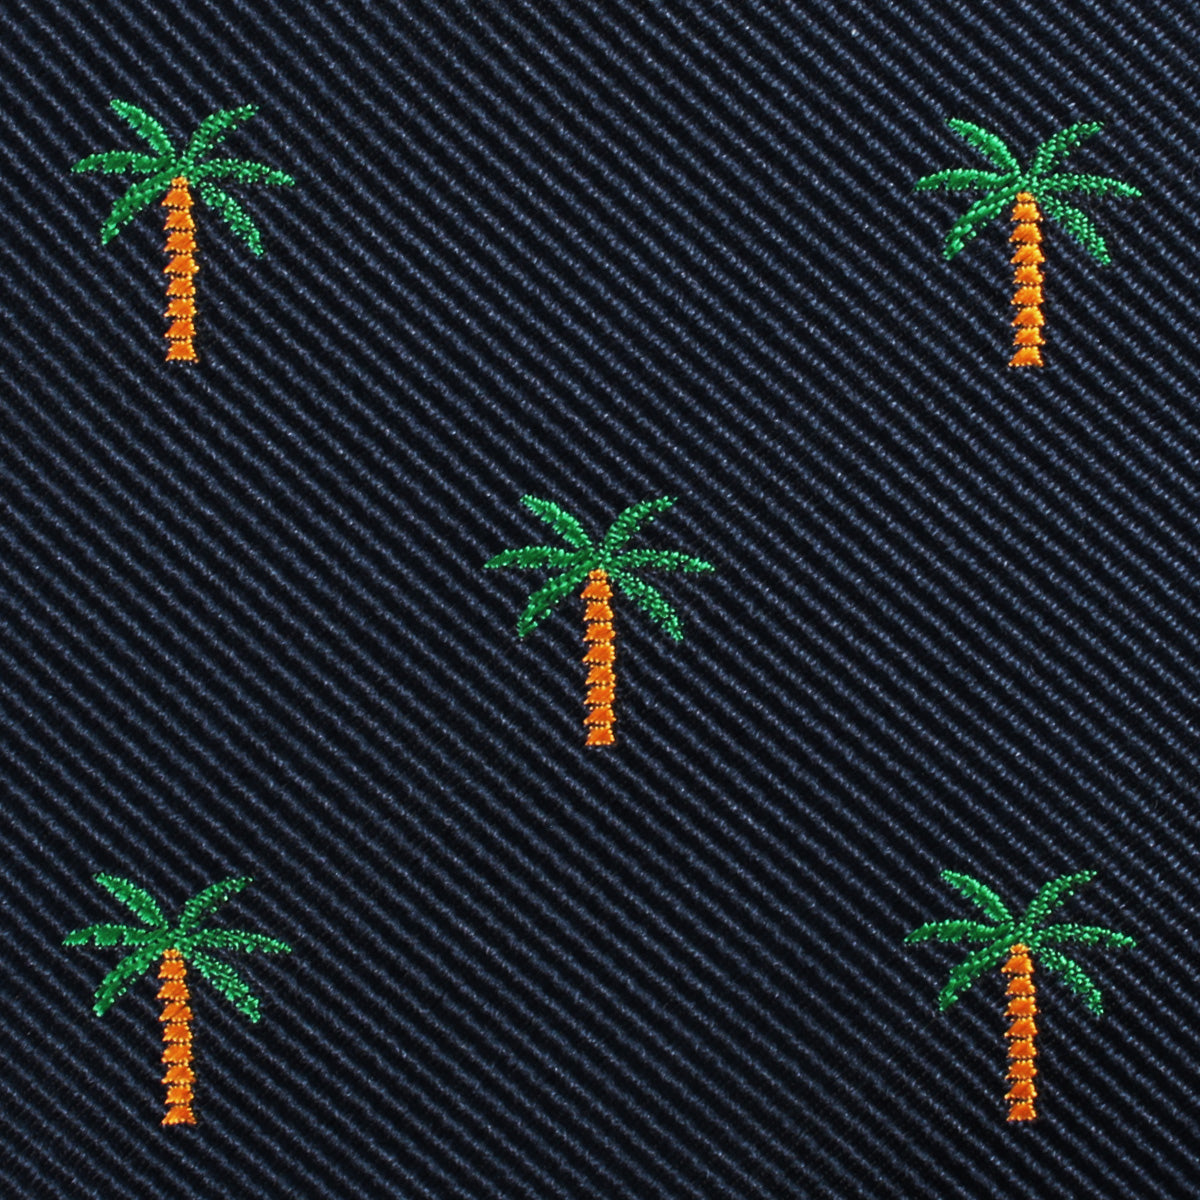 Aitutaki Palm Tree Self Bow Tie Fabric